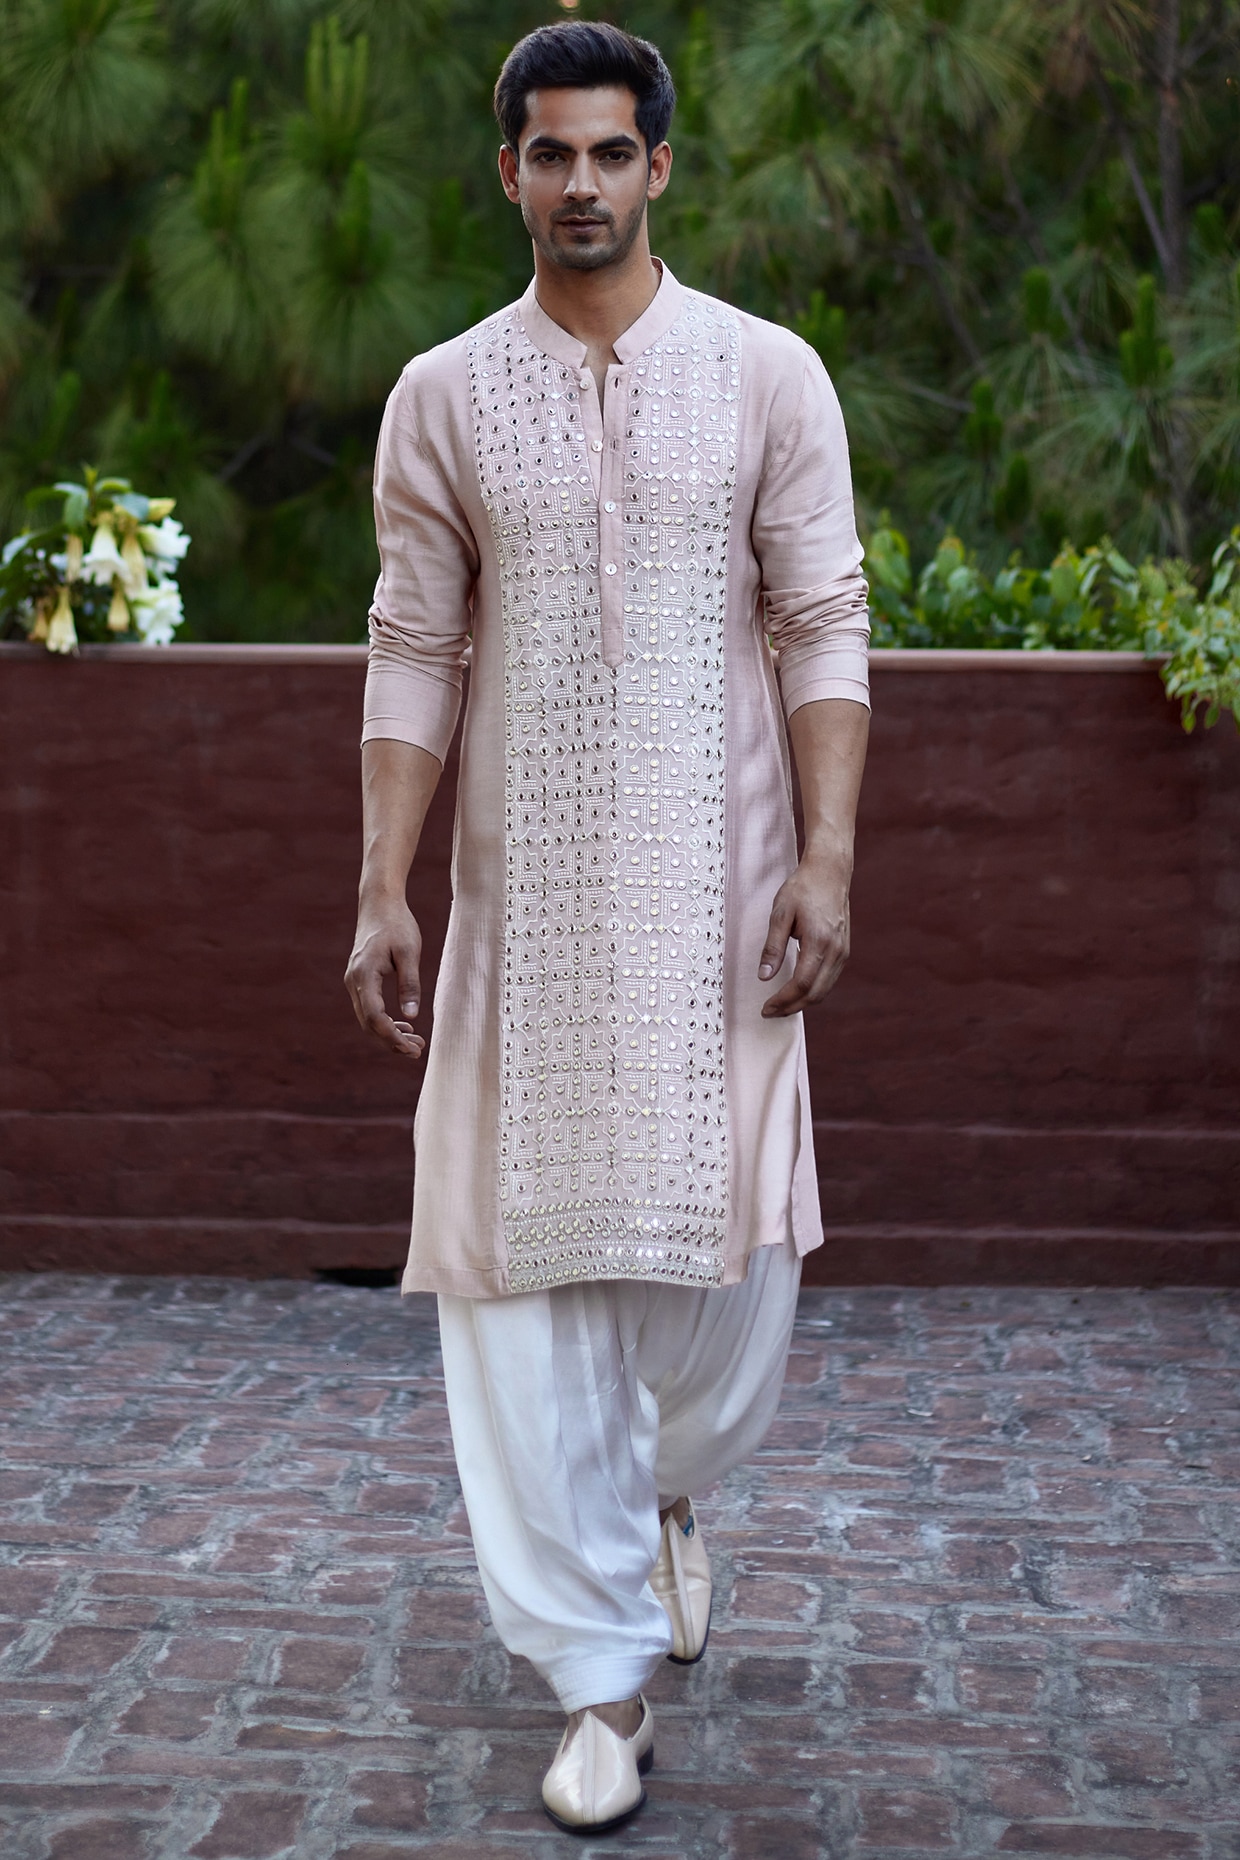 8 Jodhpuri Suit Latest Design Options For Men To Look Their Best This  Wedding Season!